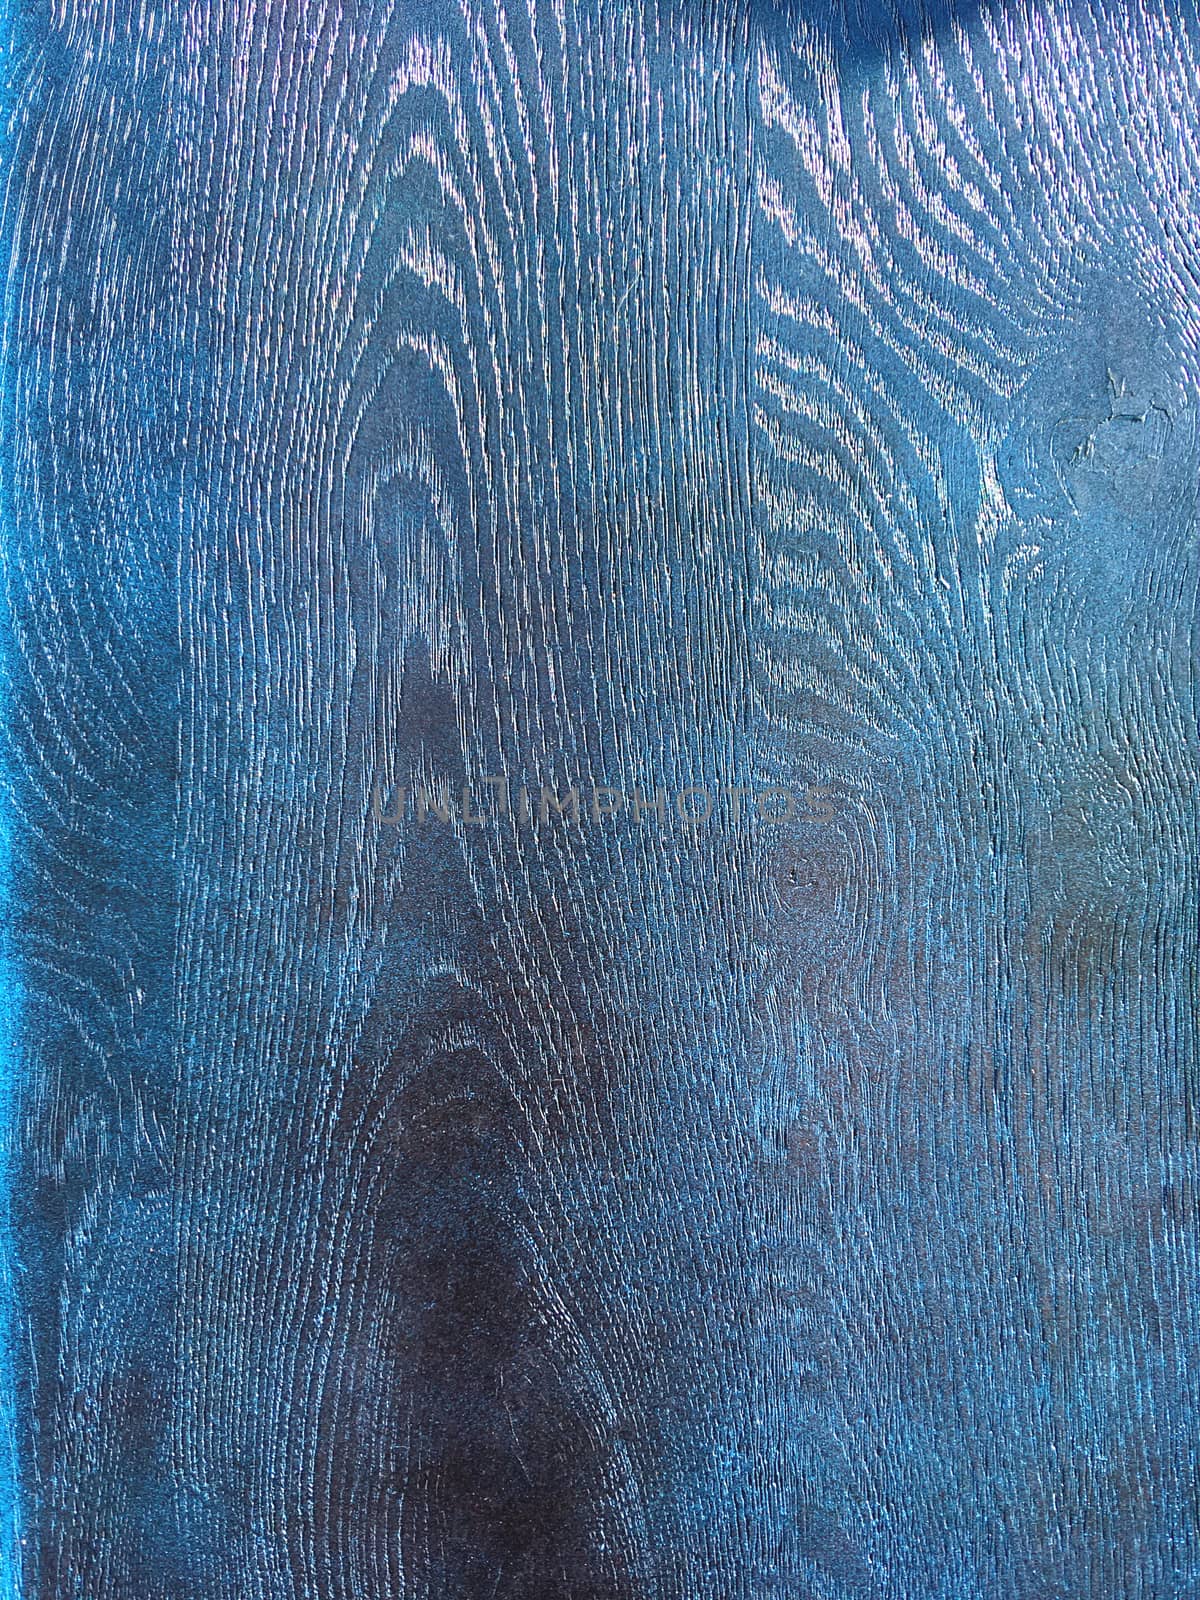 Classic blue wooden background of old door.